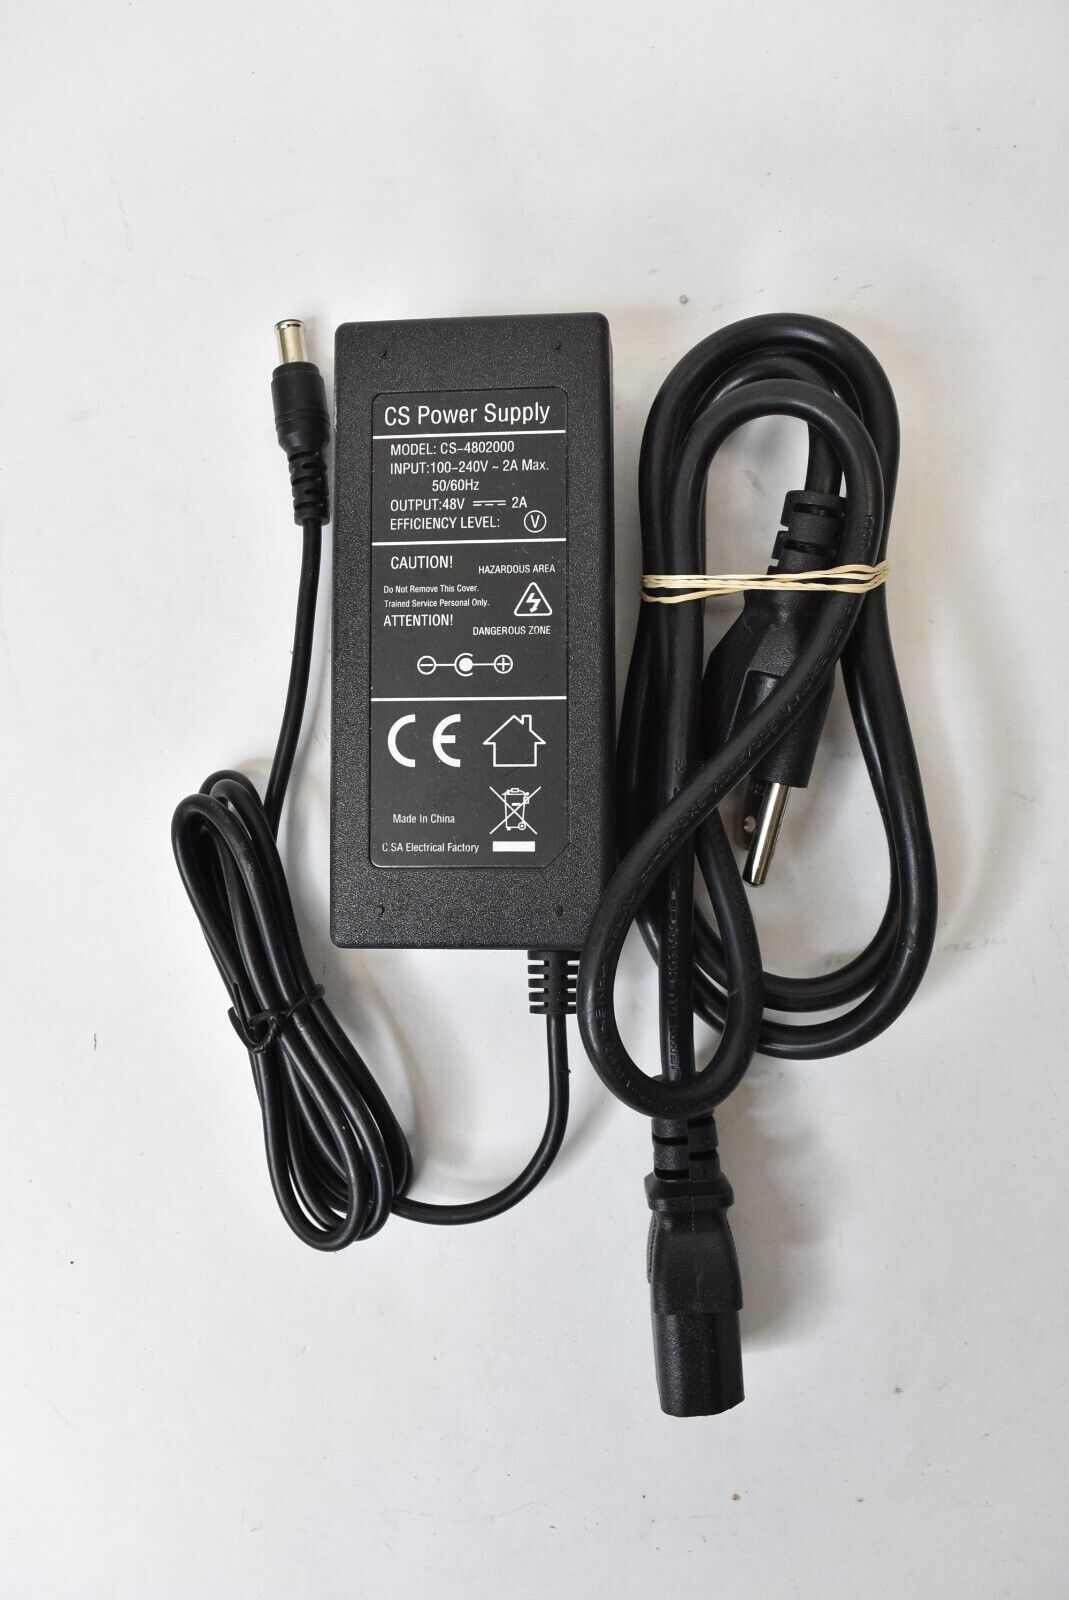 CS Power Supply Adapter Unit CS-4802000 48V 2A Brand: CS Power Type: Adapter Features: Powered CS Power Supply A